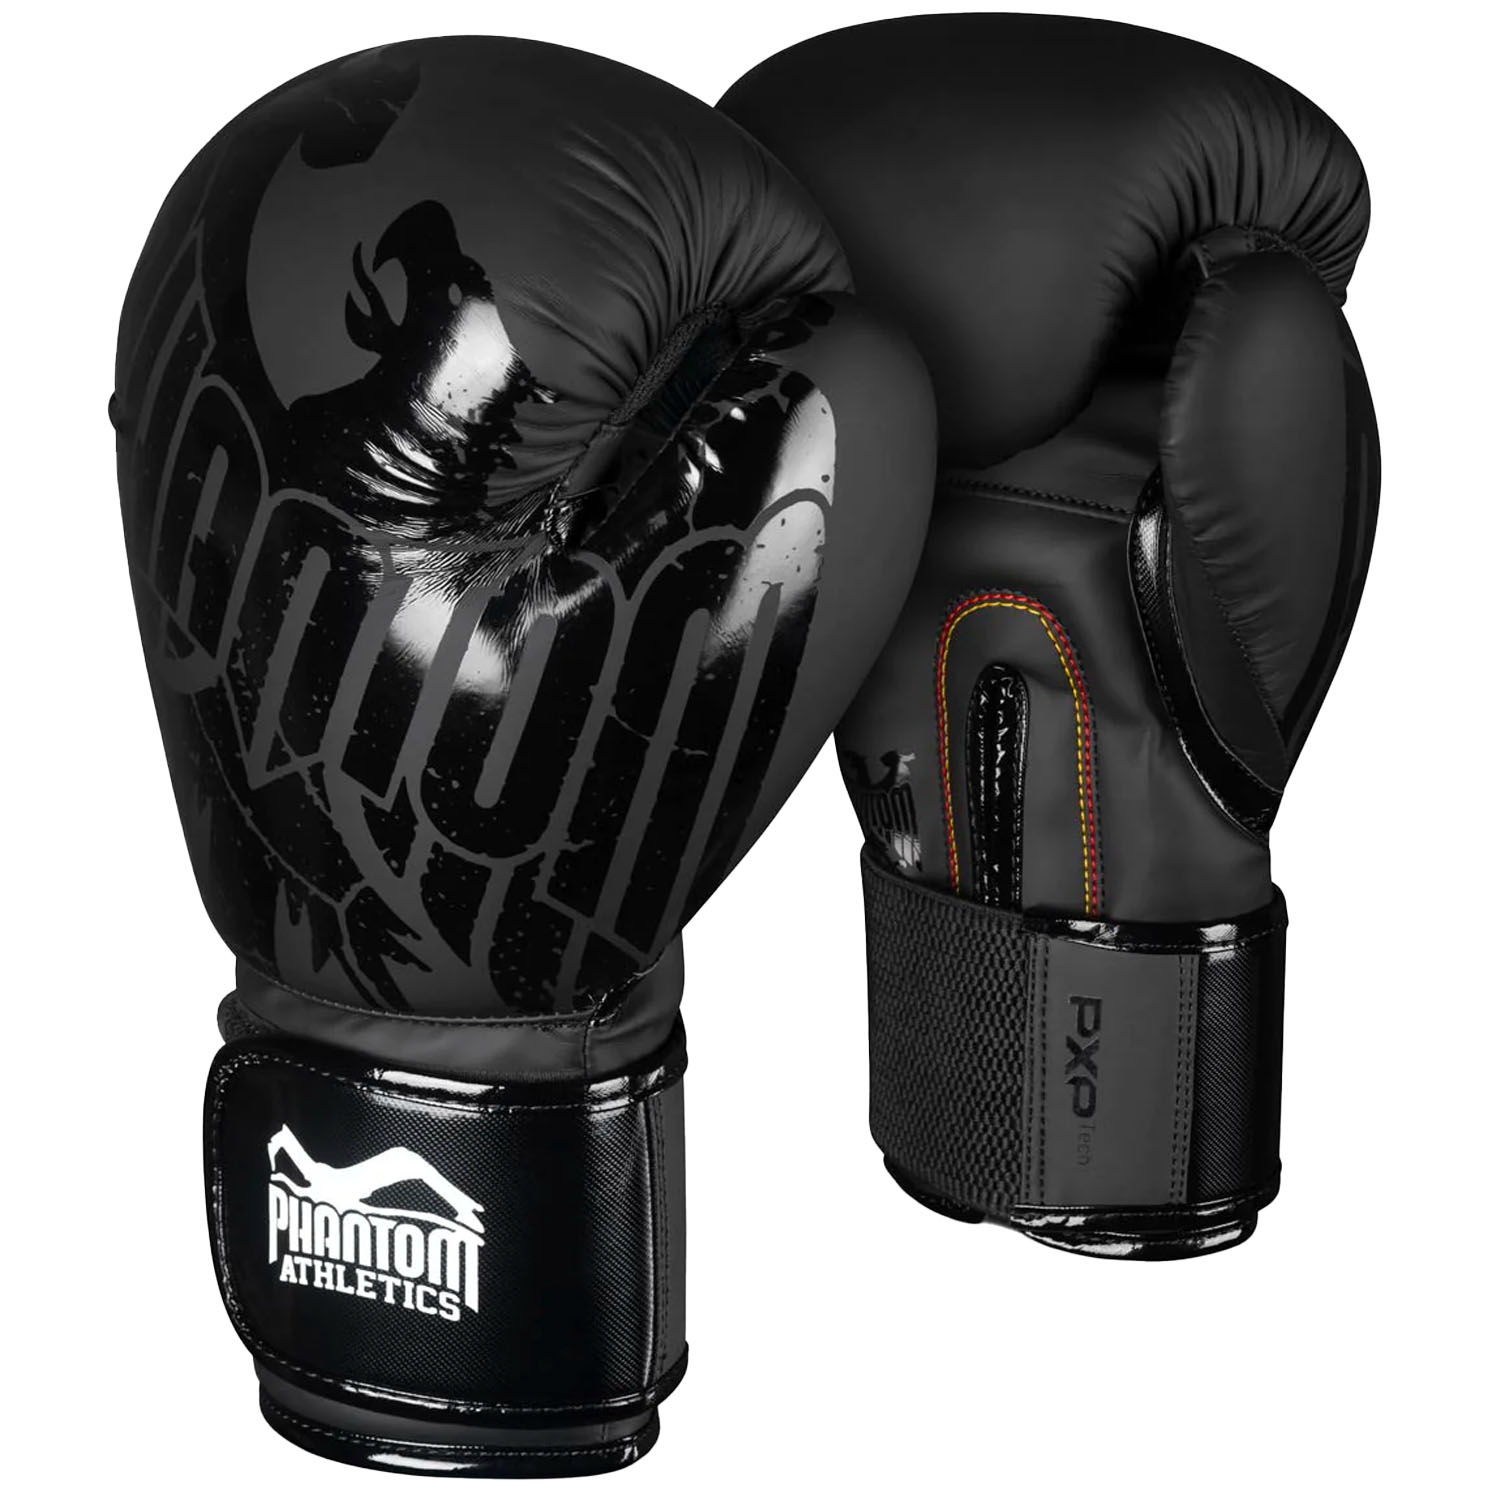 Phantom Athletics Boxing Gloves, German Eagle, black